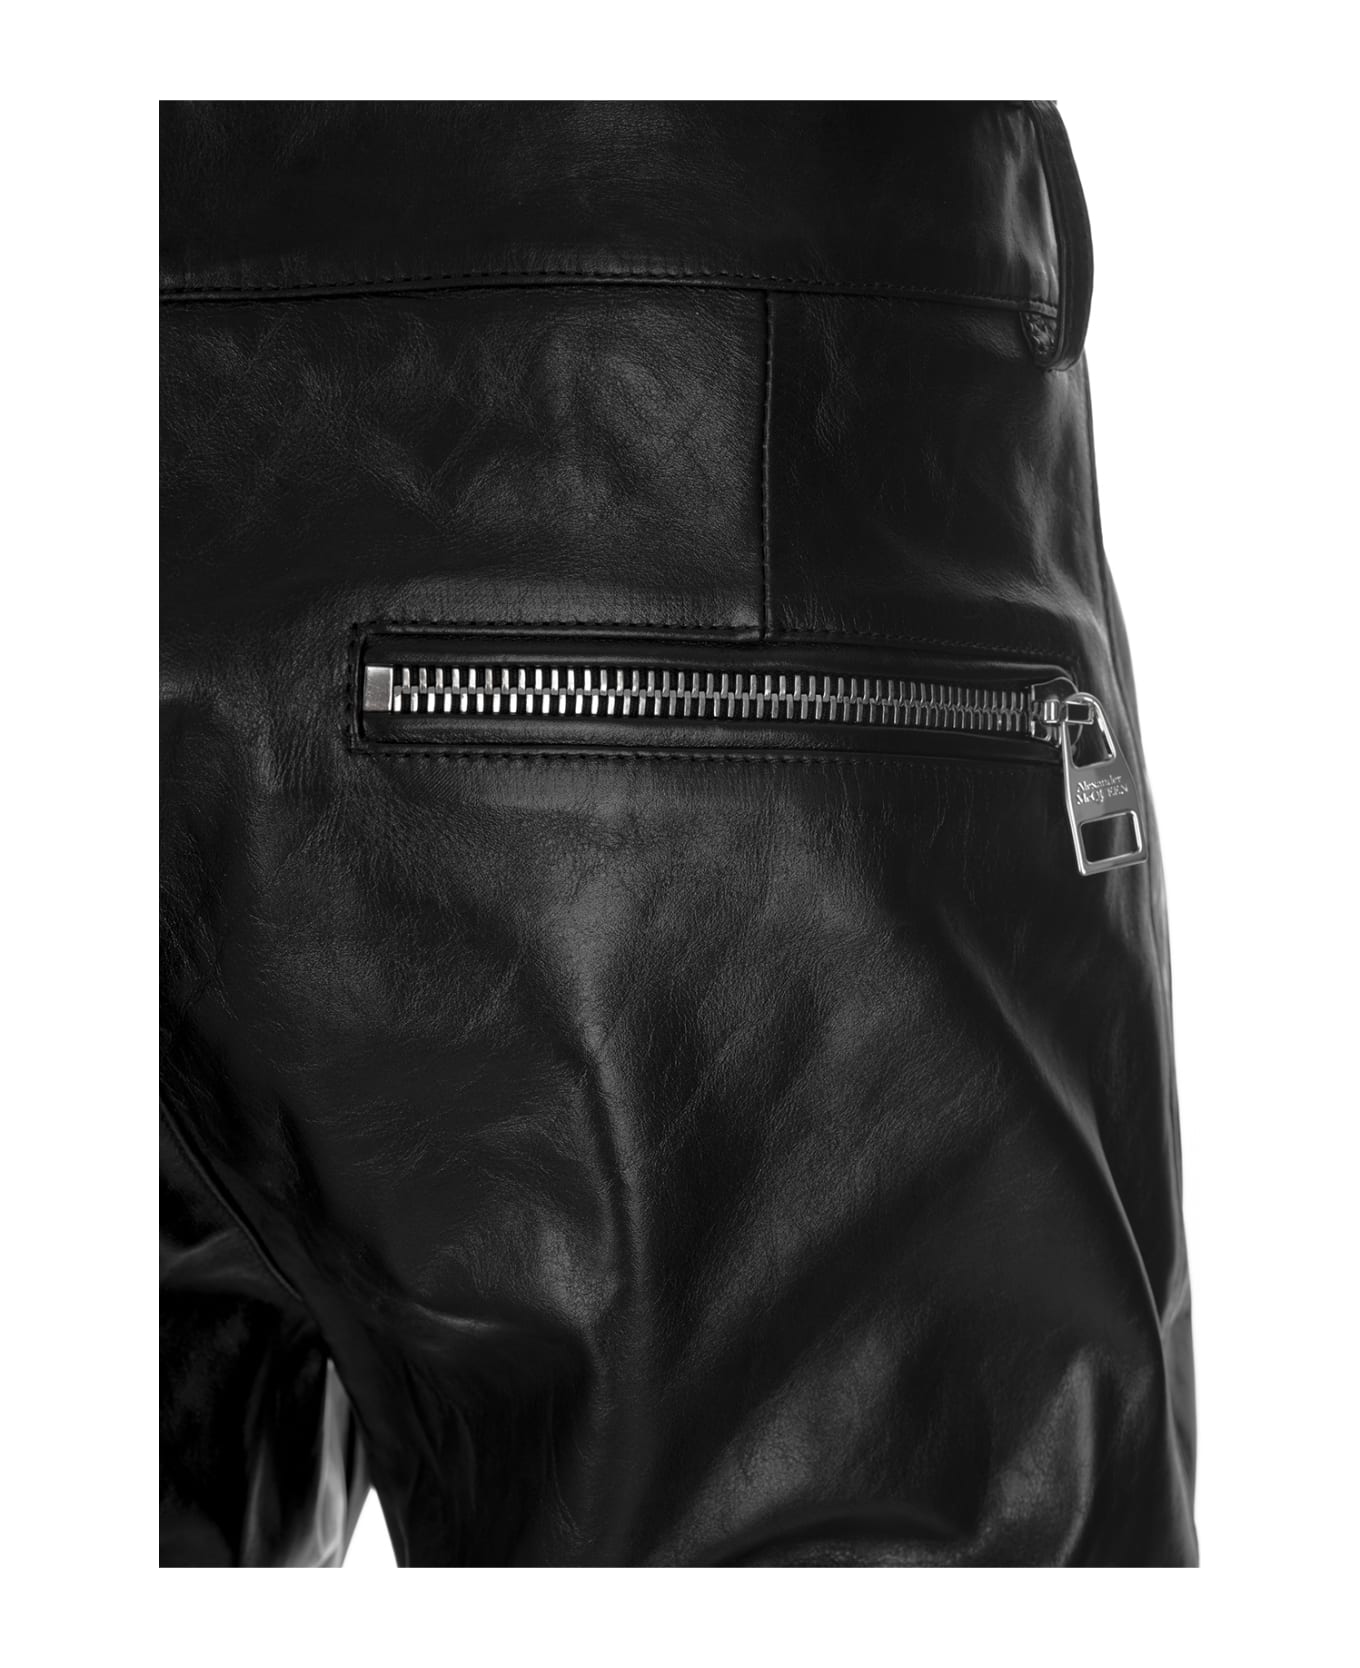 Alexander McQueen Leather Biker Trousers In Black - Black